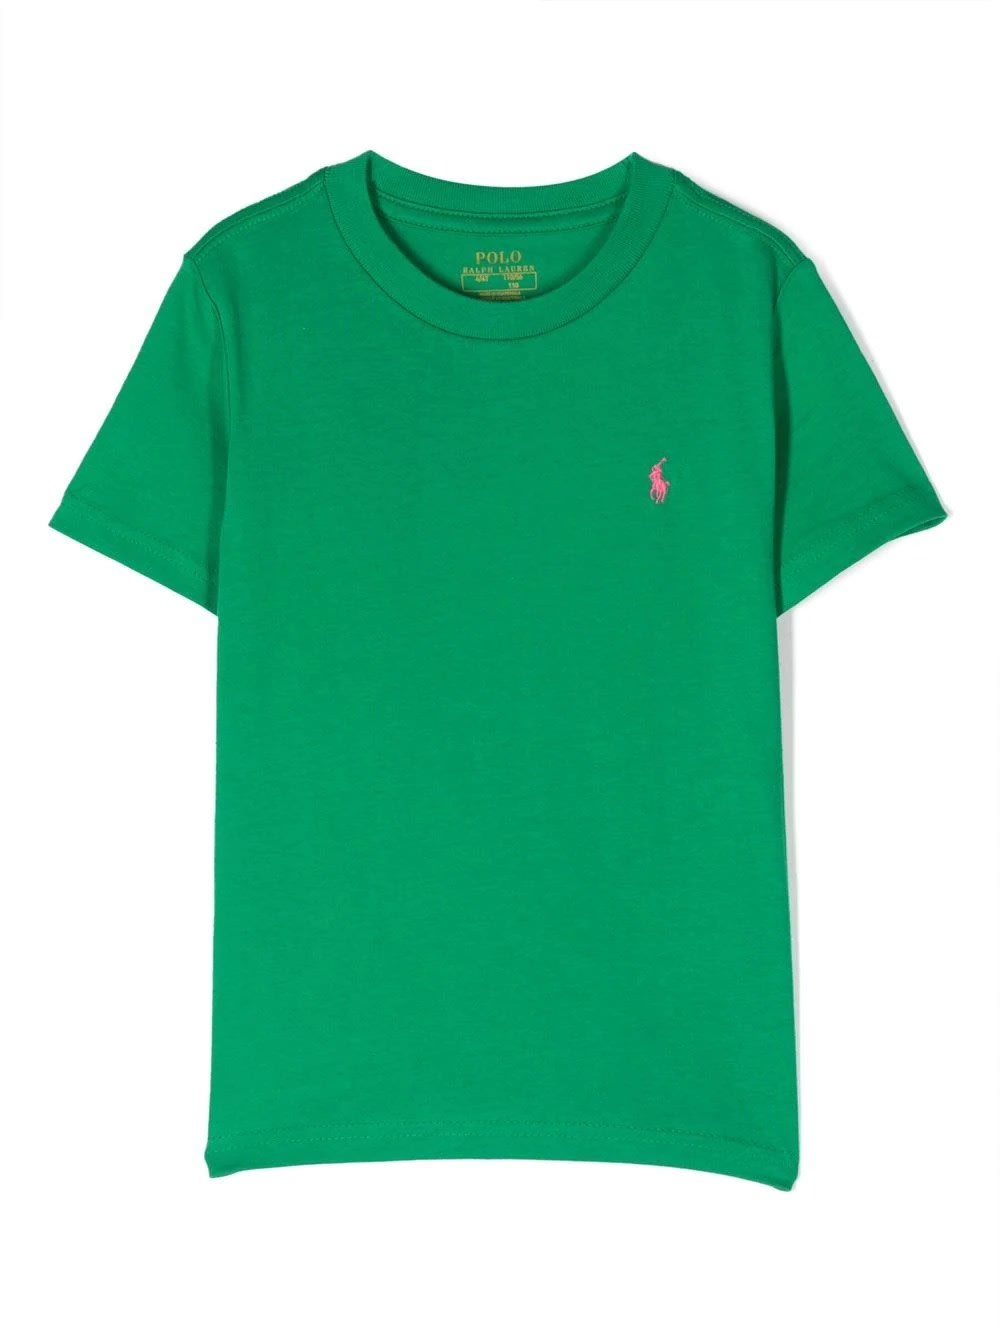 Ralph Lauren Green T-shirt With Pink Pony